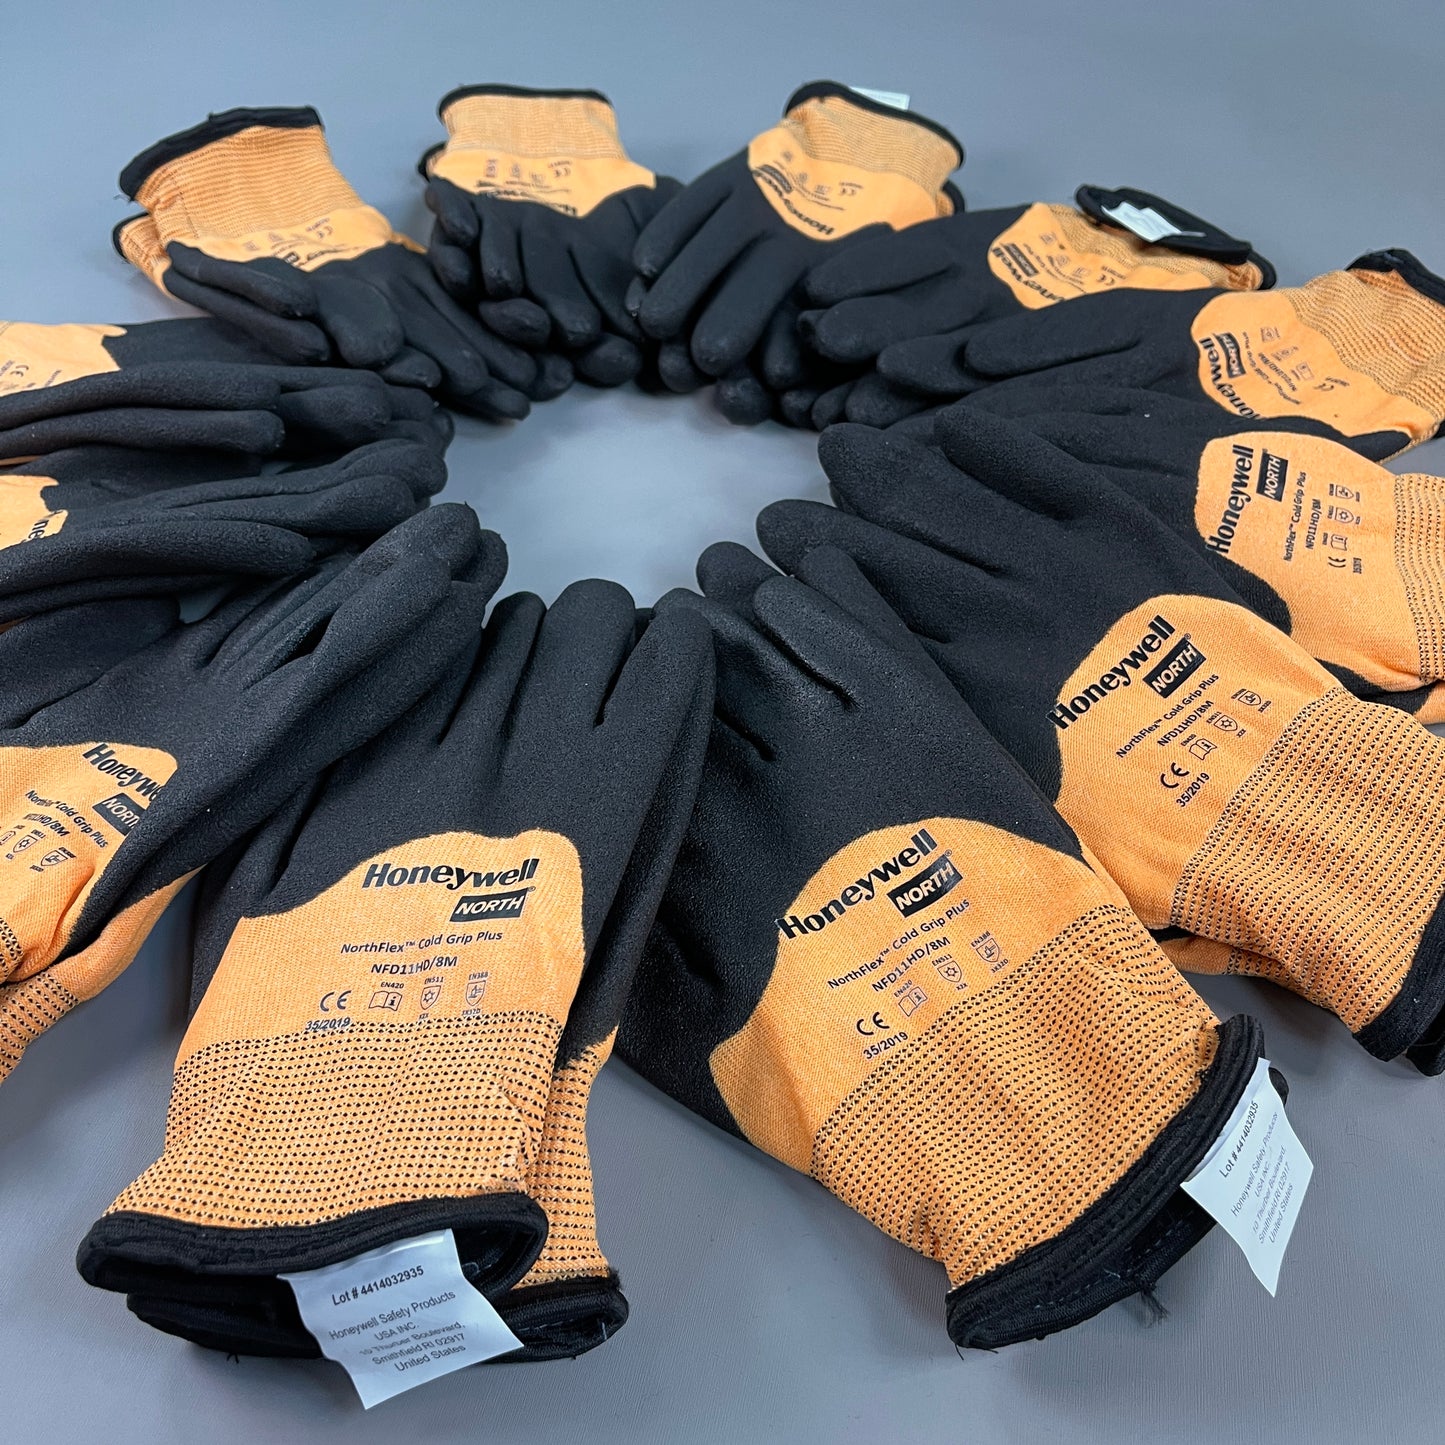 HONEYWELL Lot of 12-Pair Northflex Cold Grip Plus Gloves NFD11HD 8/M (New)